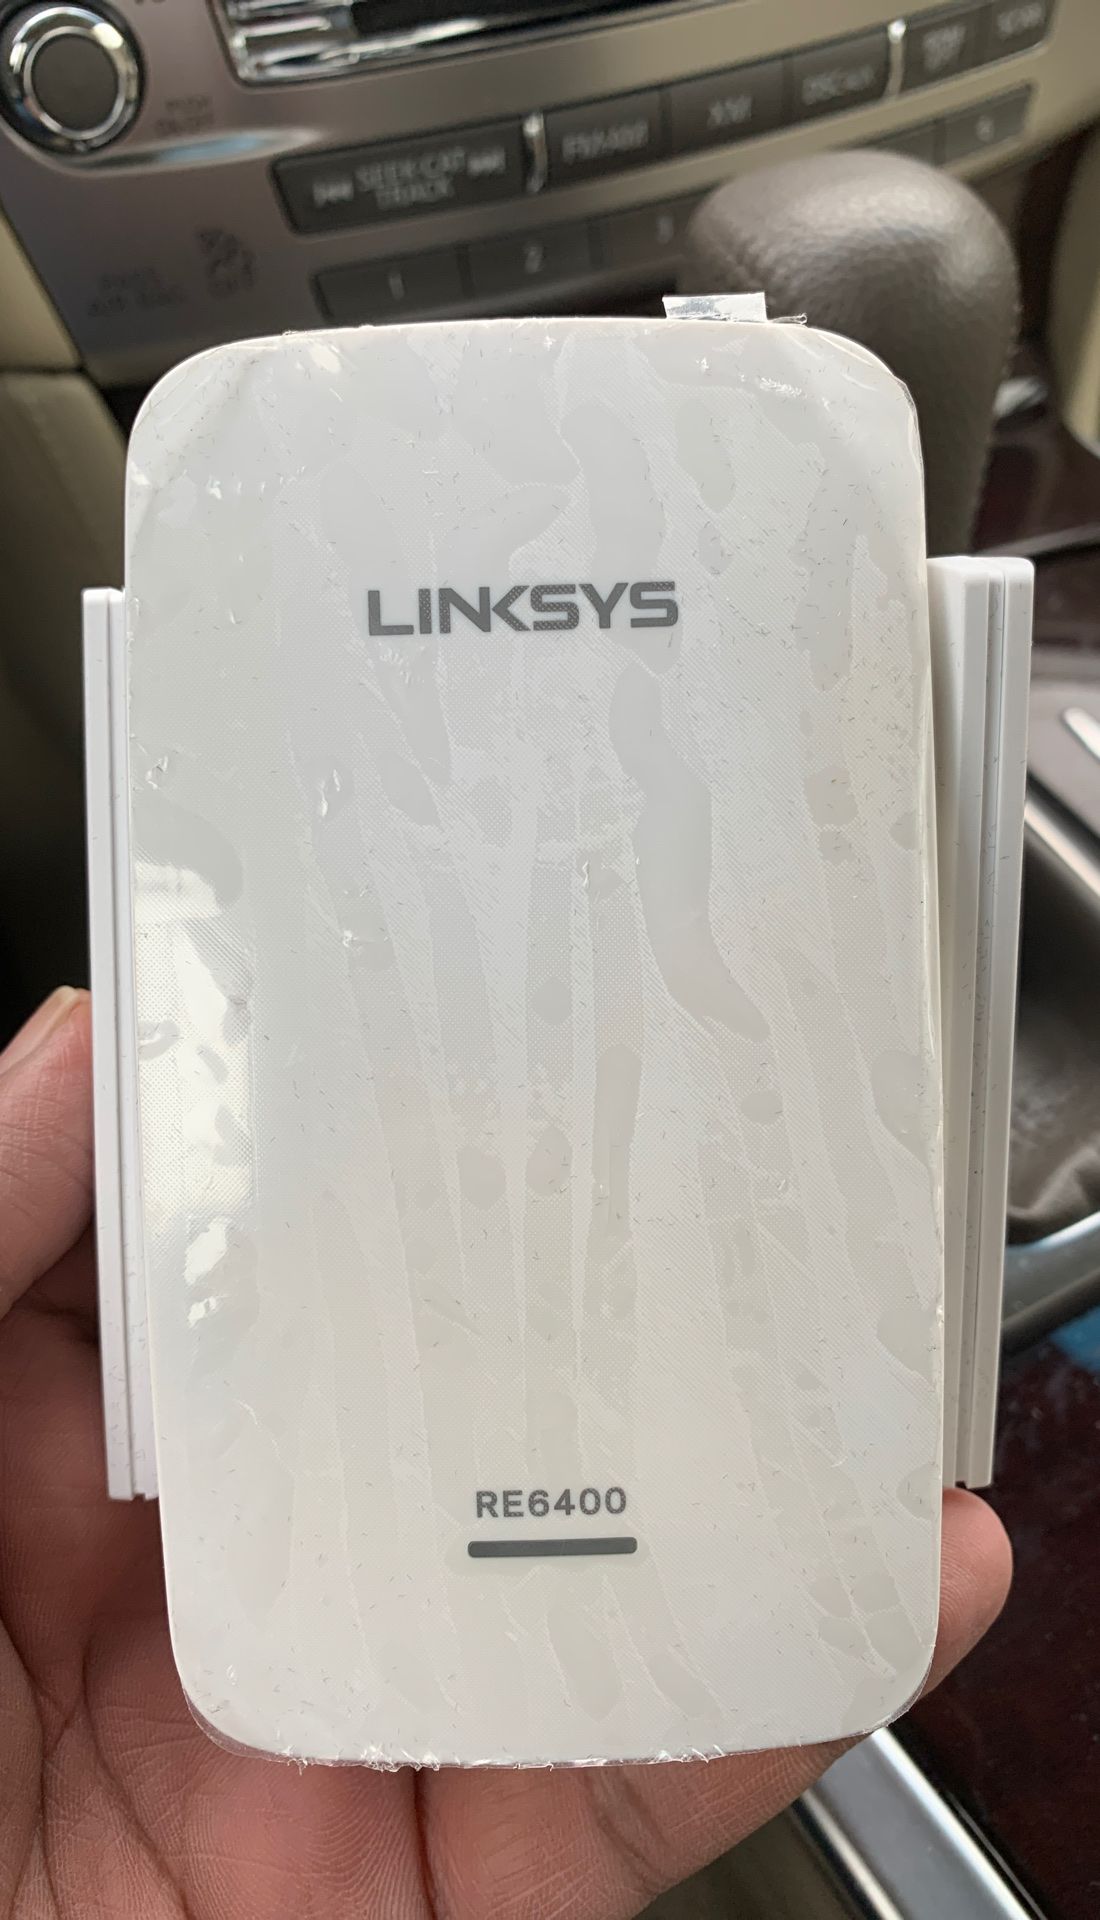 Linksys wifi extender - hardly used